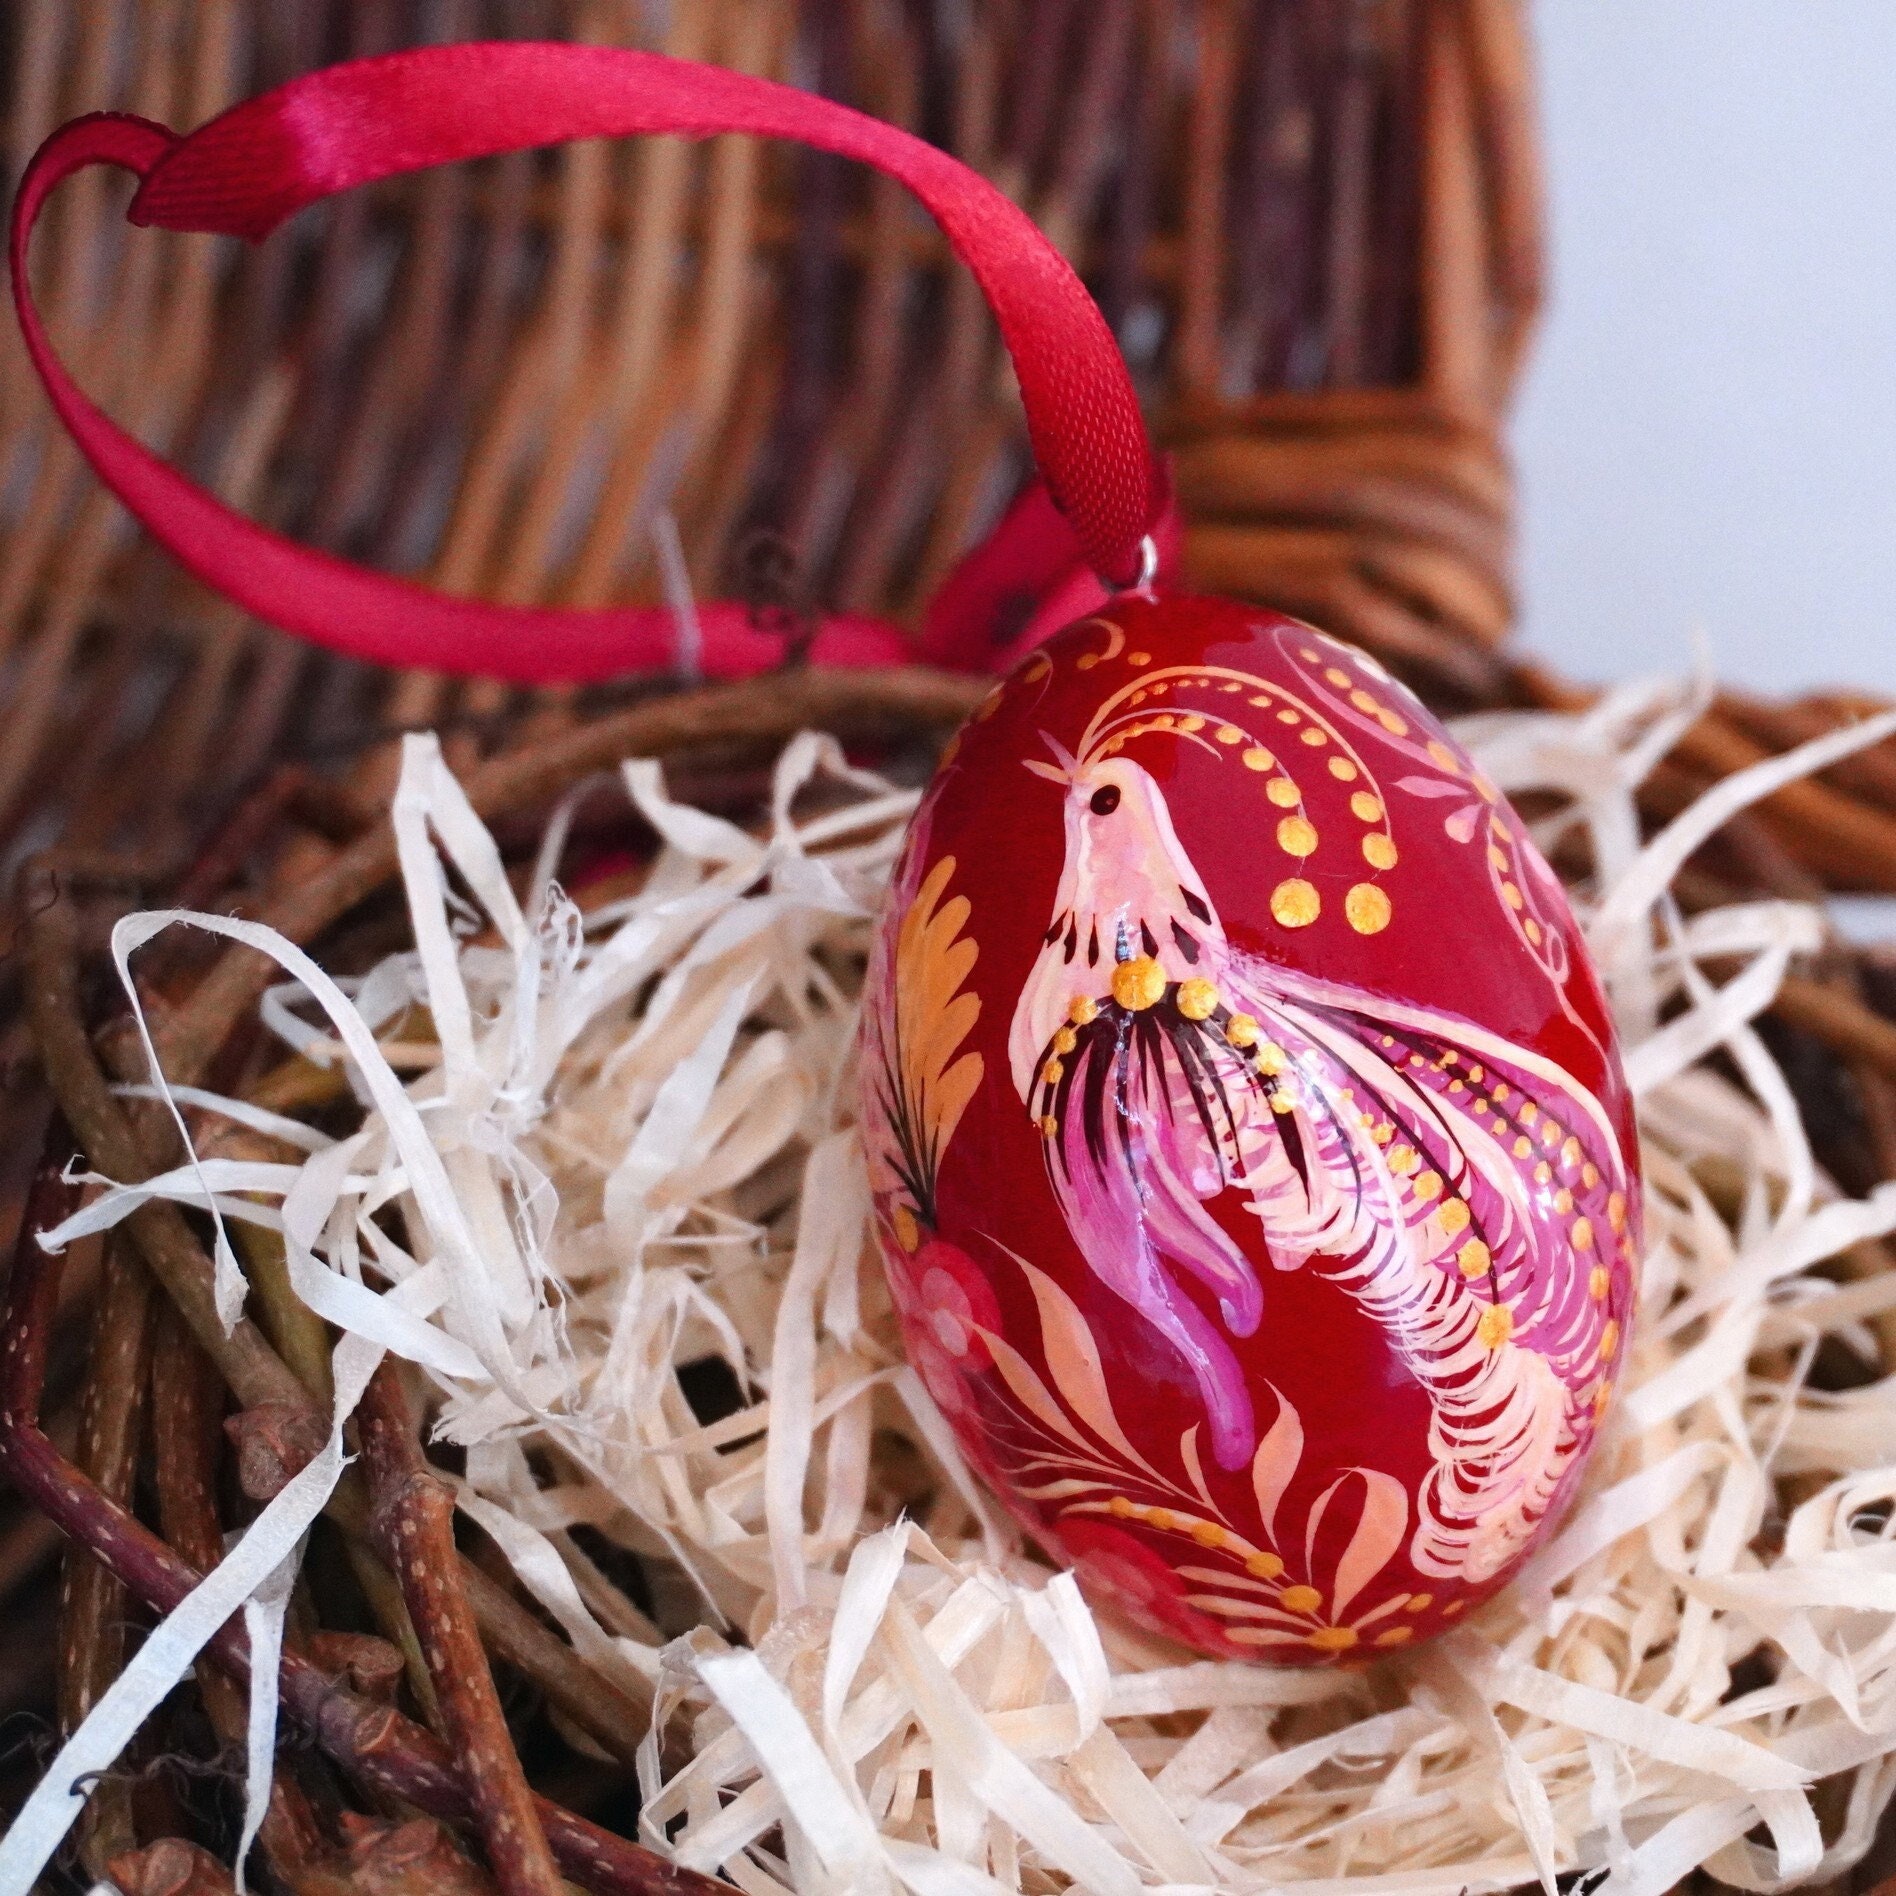 La historia sobre la tradicional pintura de los huevos de Pascua